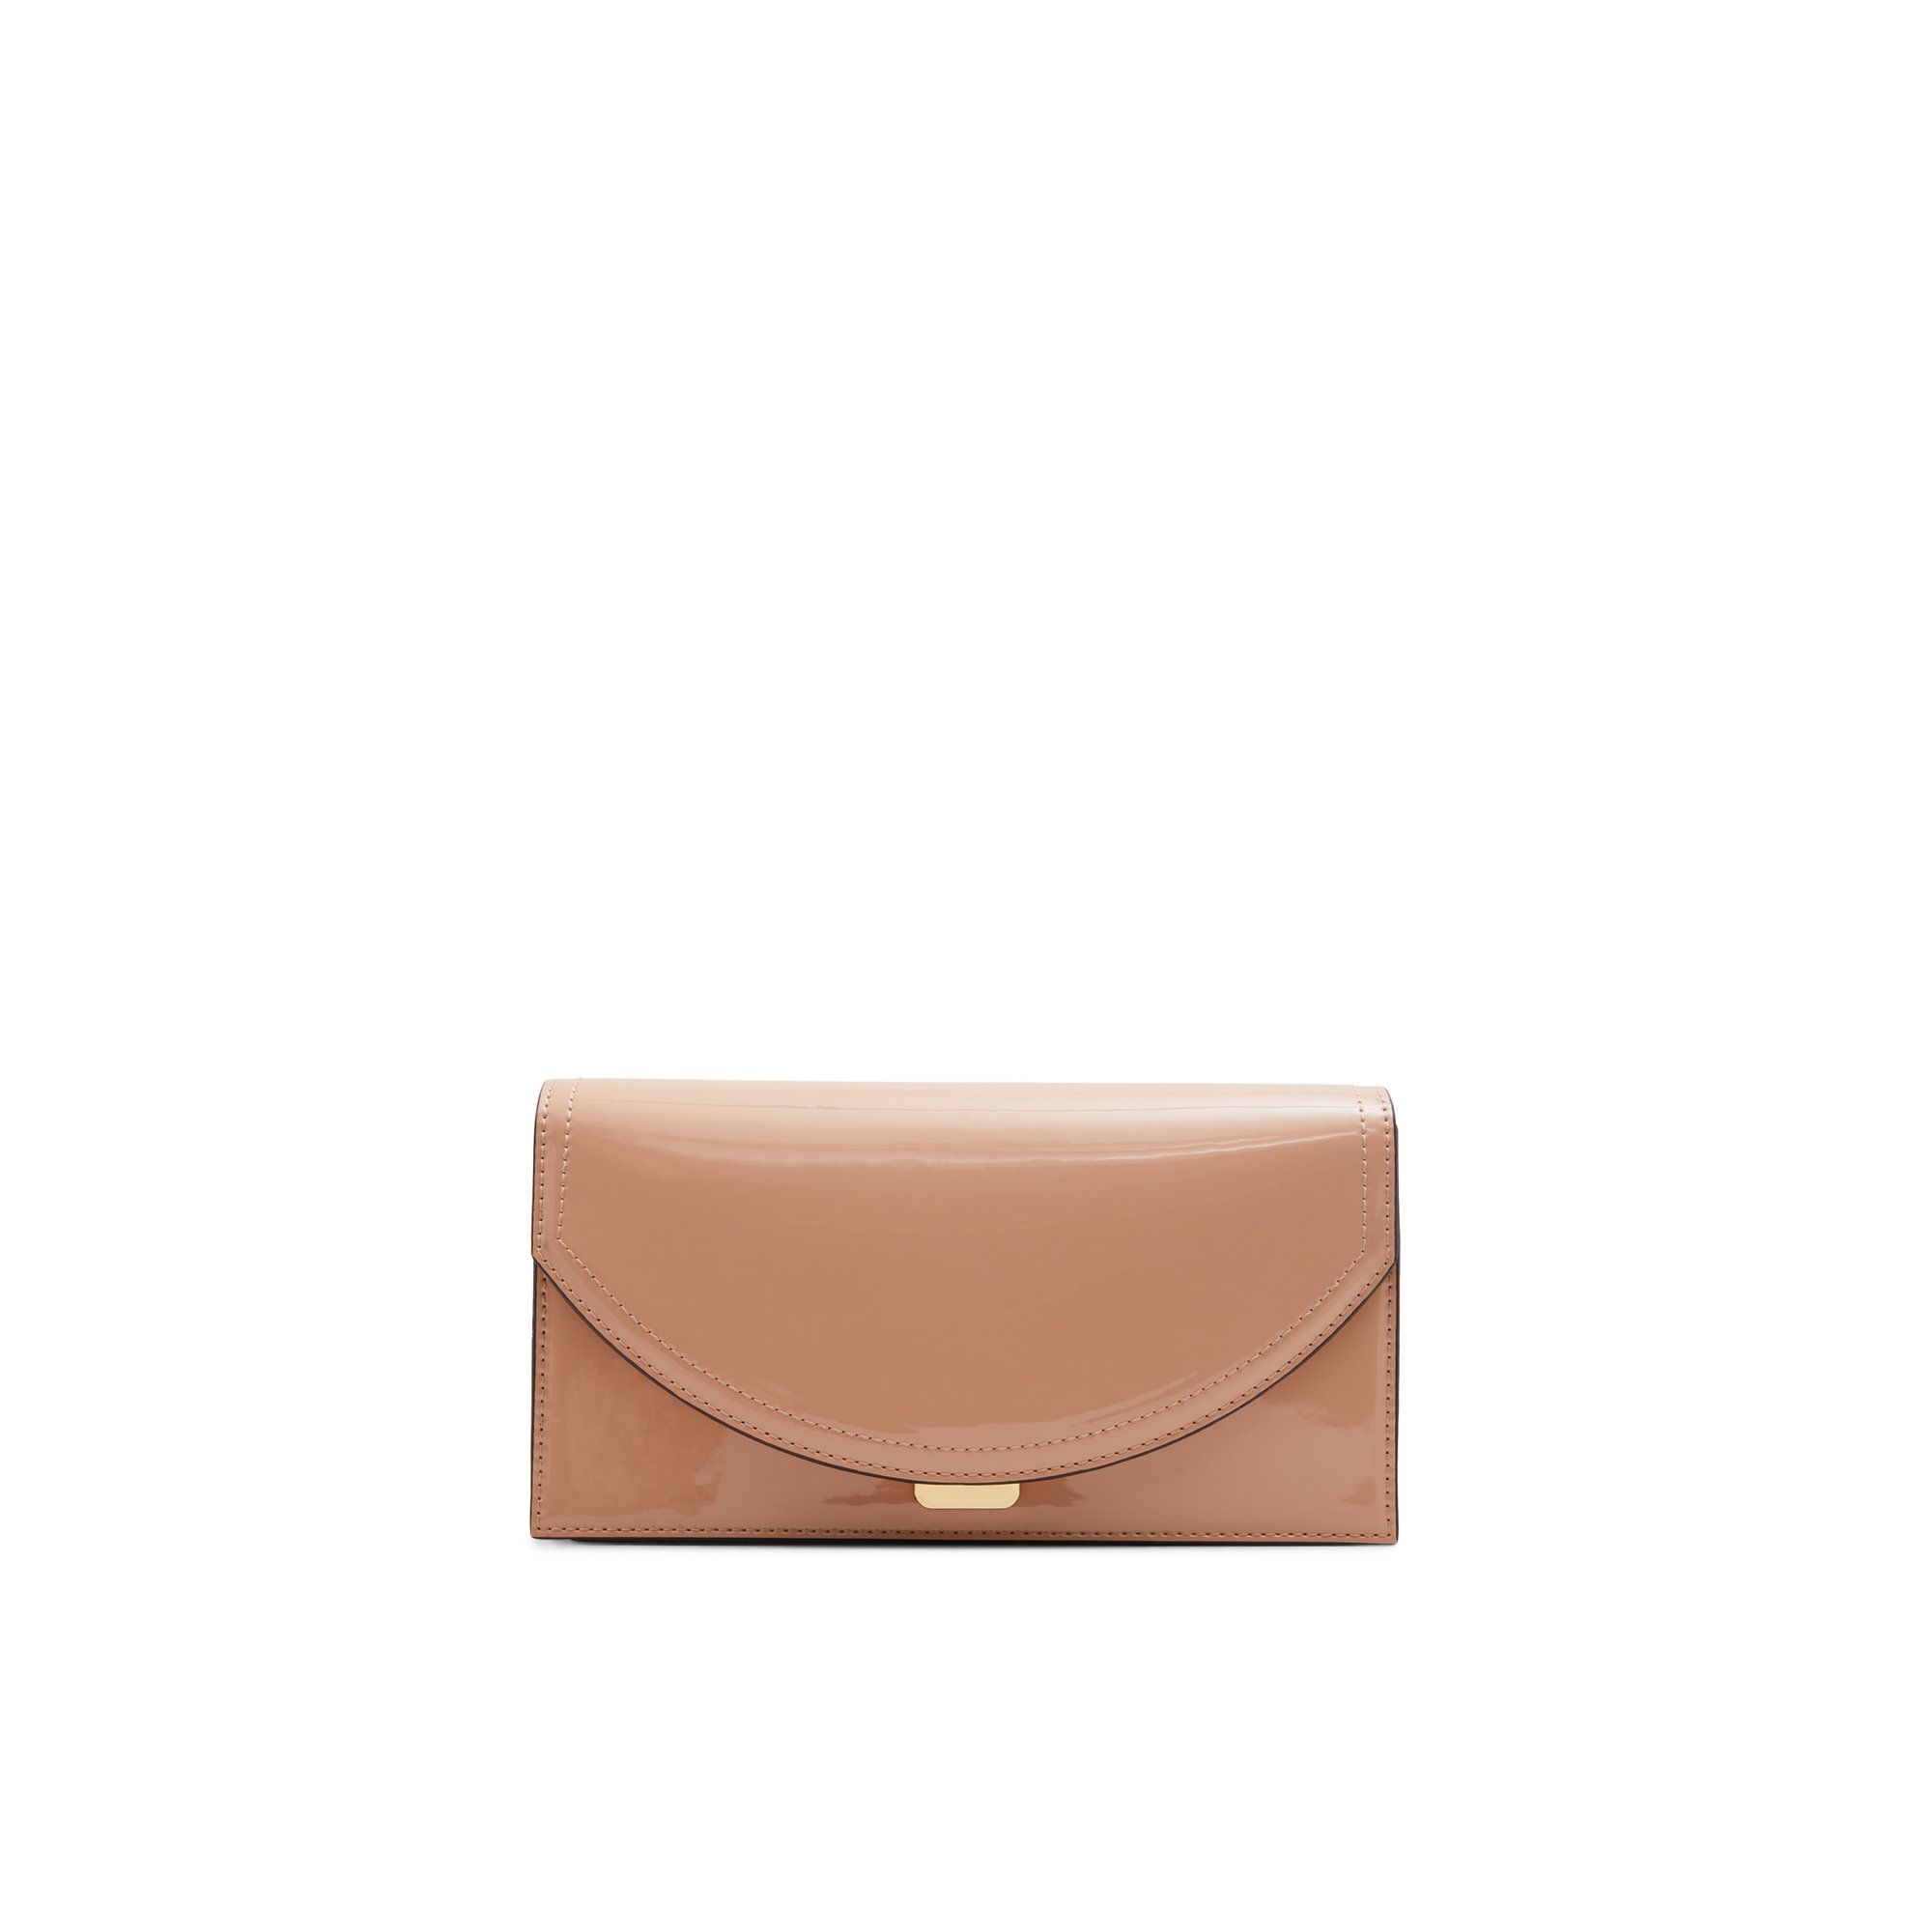 ALDO Kalonnx - Women's Clutches & Evening Bag Handbag - Beige